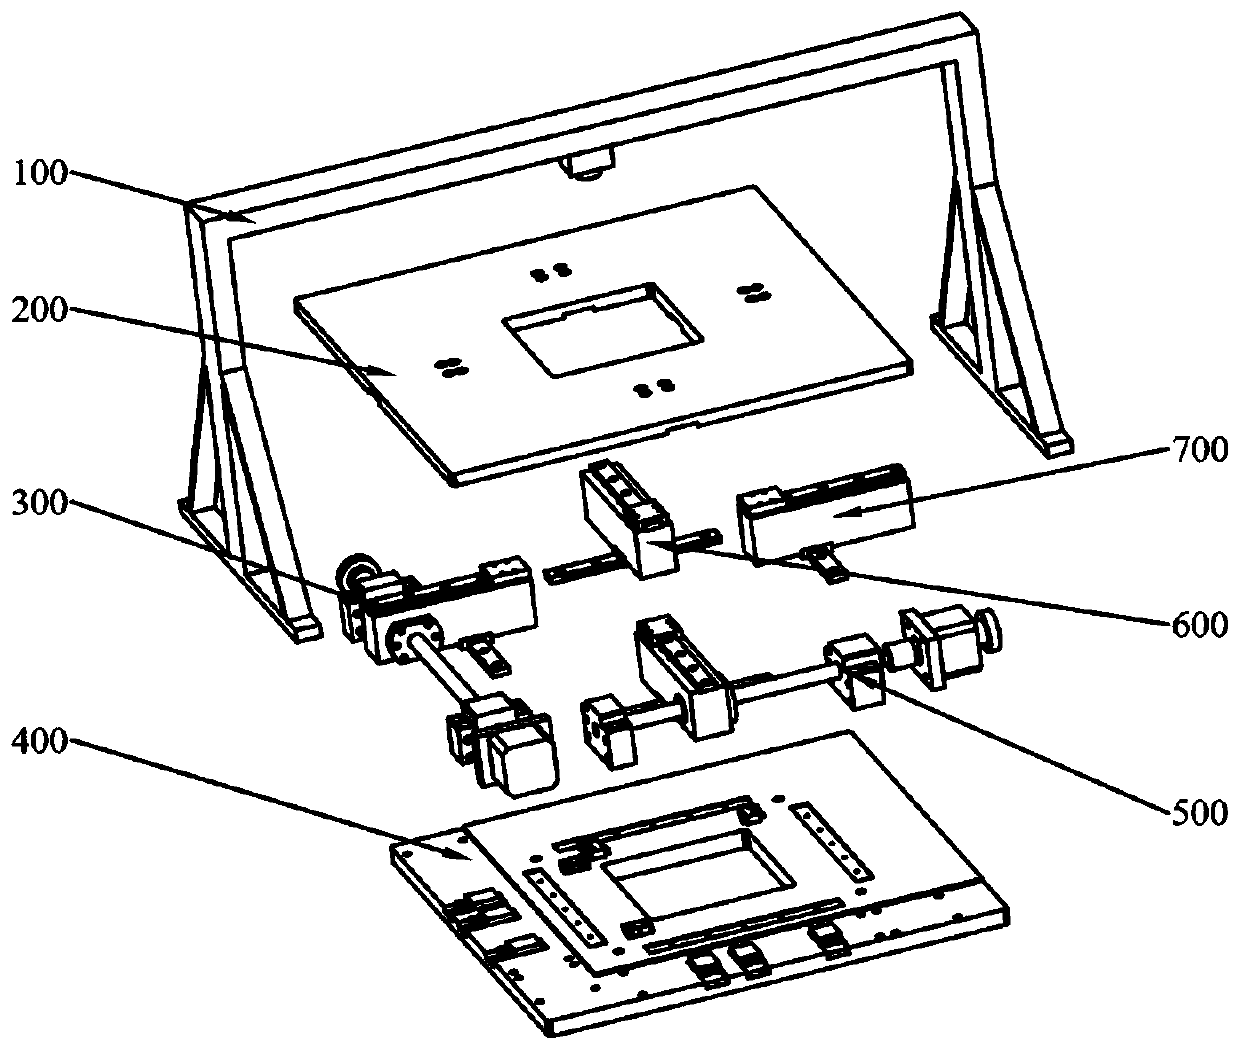 Precision sliding table for multi-workpiece parallel vision measurement